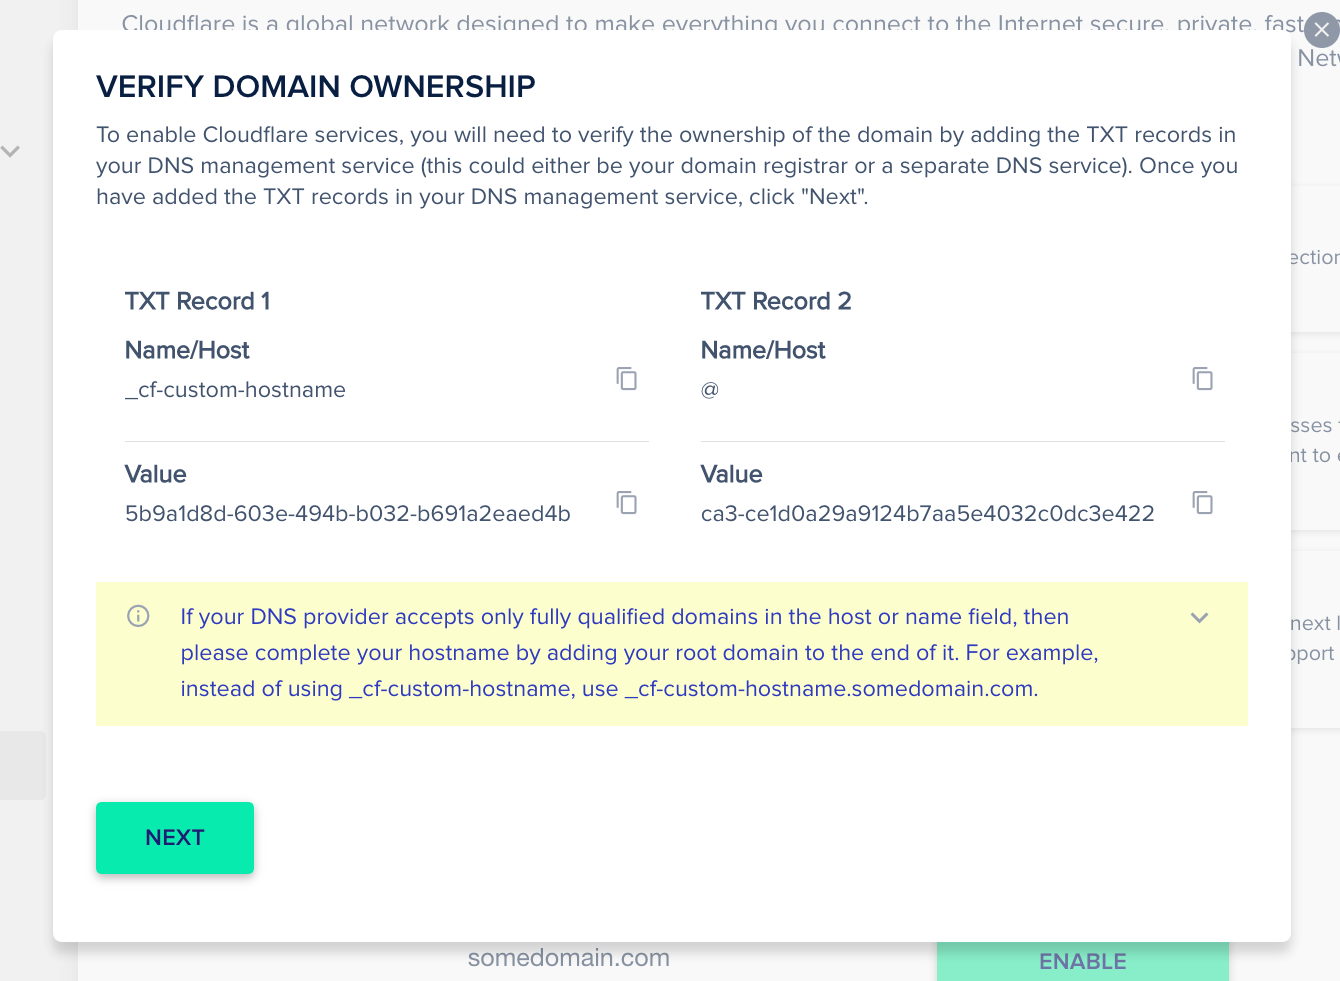 verify domain ownership